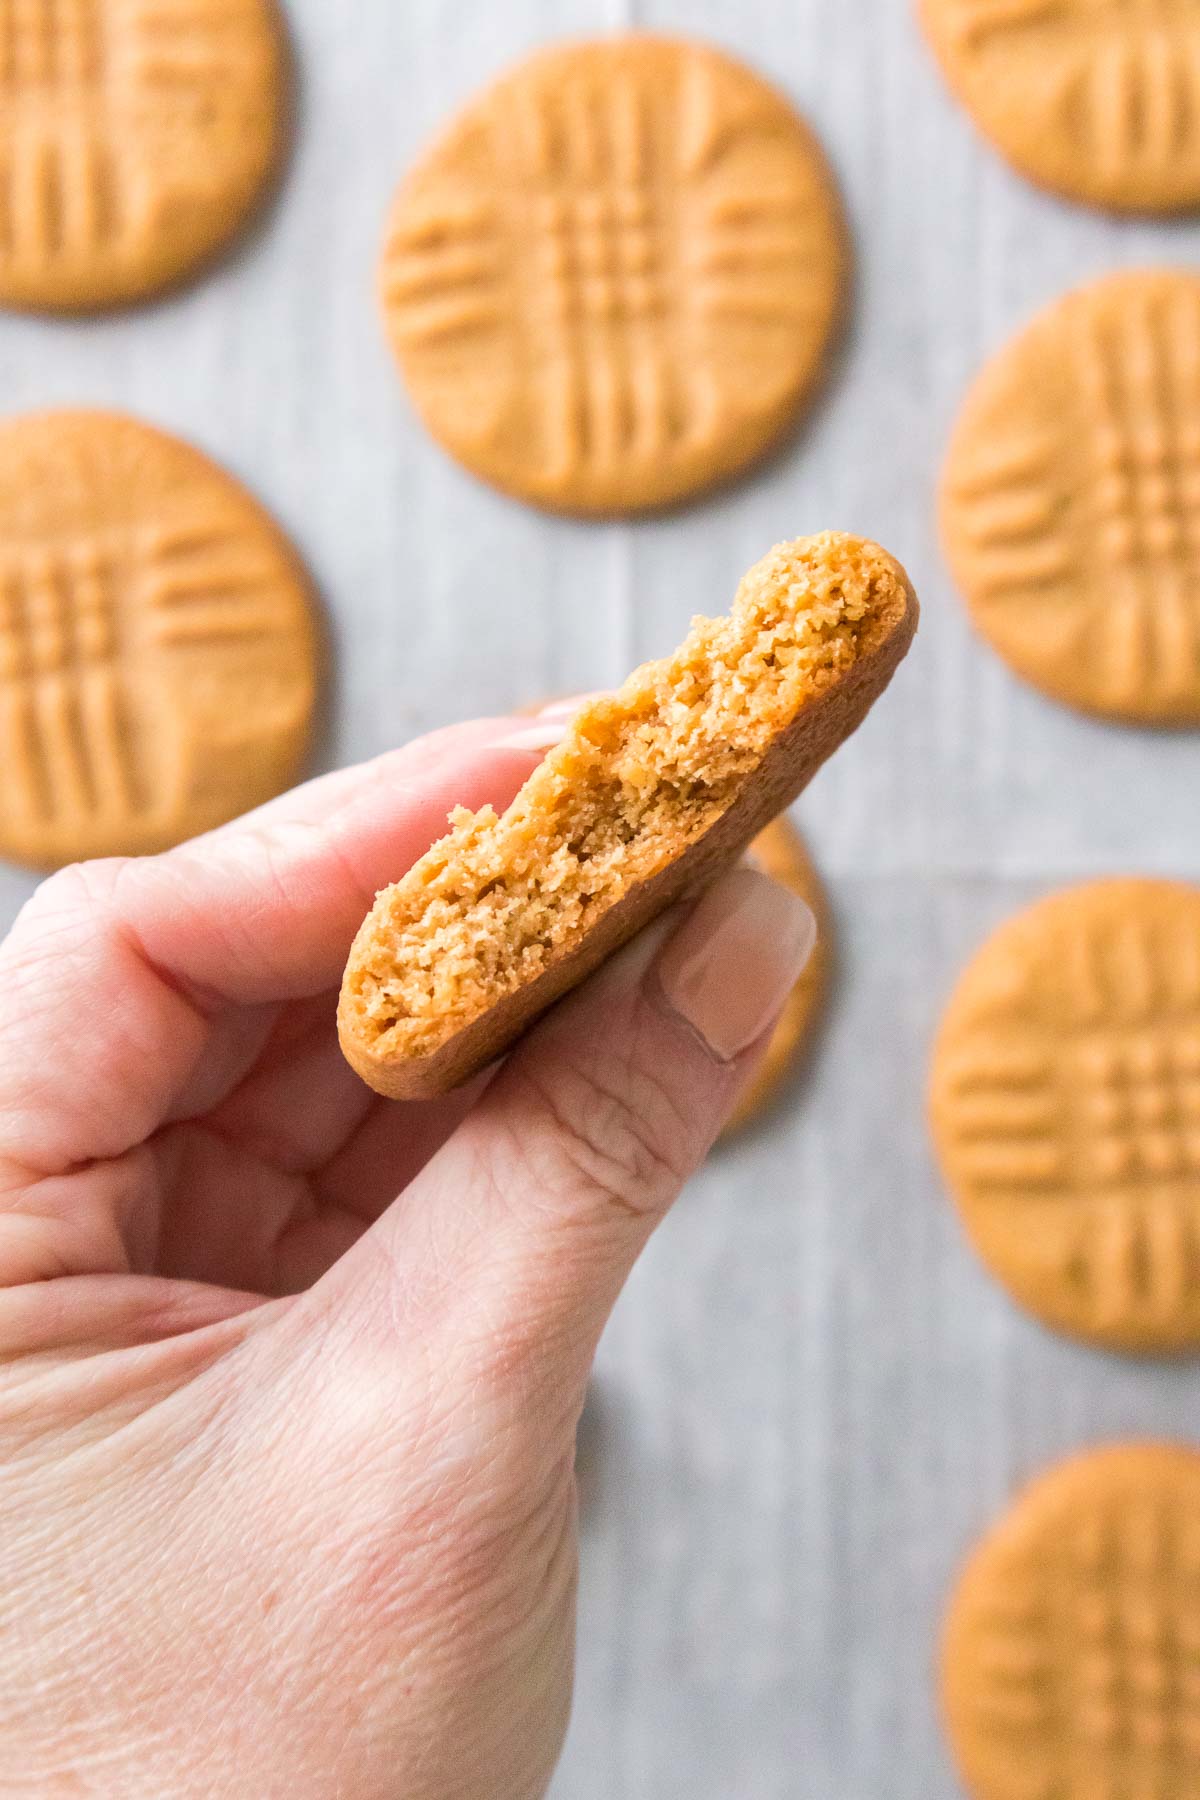 Hand holding peanut butter cookie broken in half to show texture inside